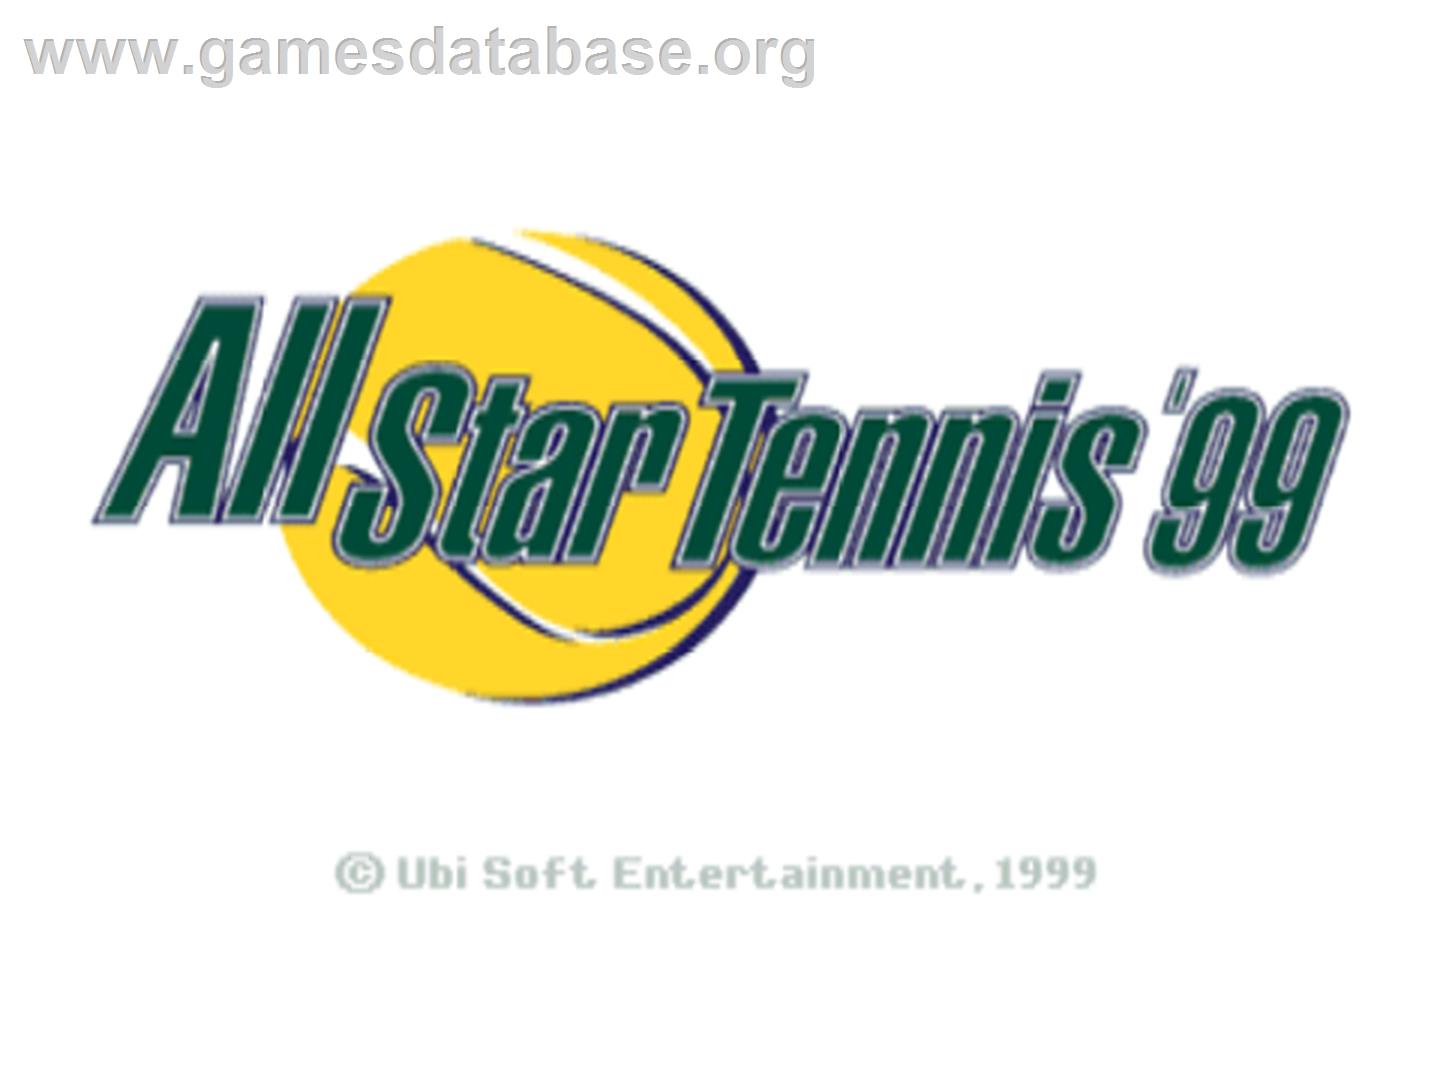 All Star Tennis '99 - Nintendo N64 - Artwork - Title Screen